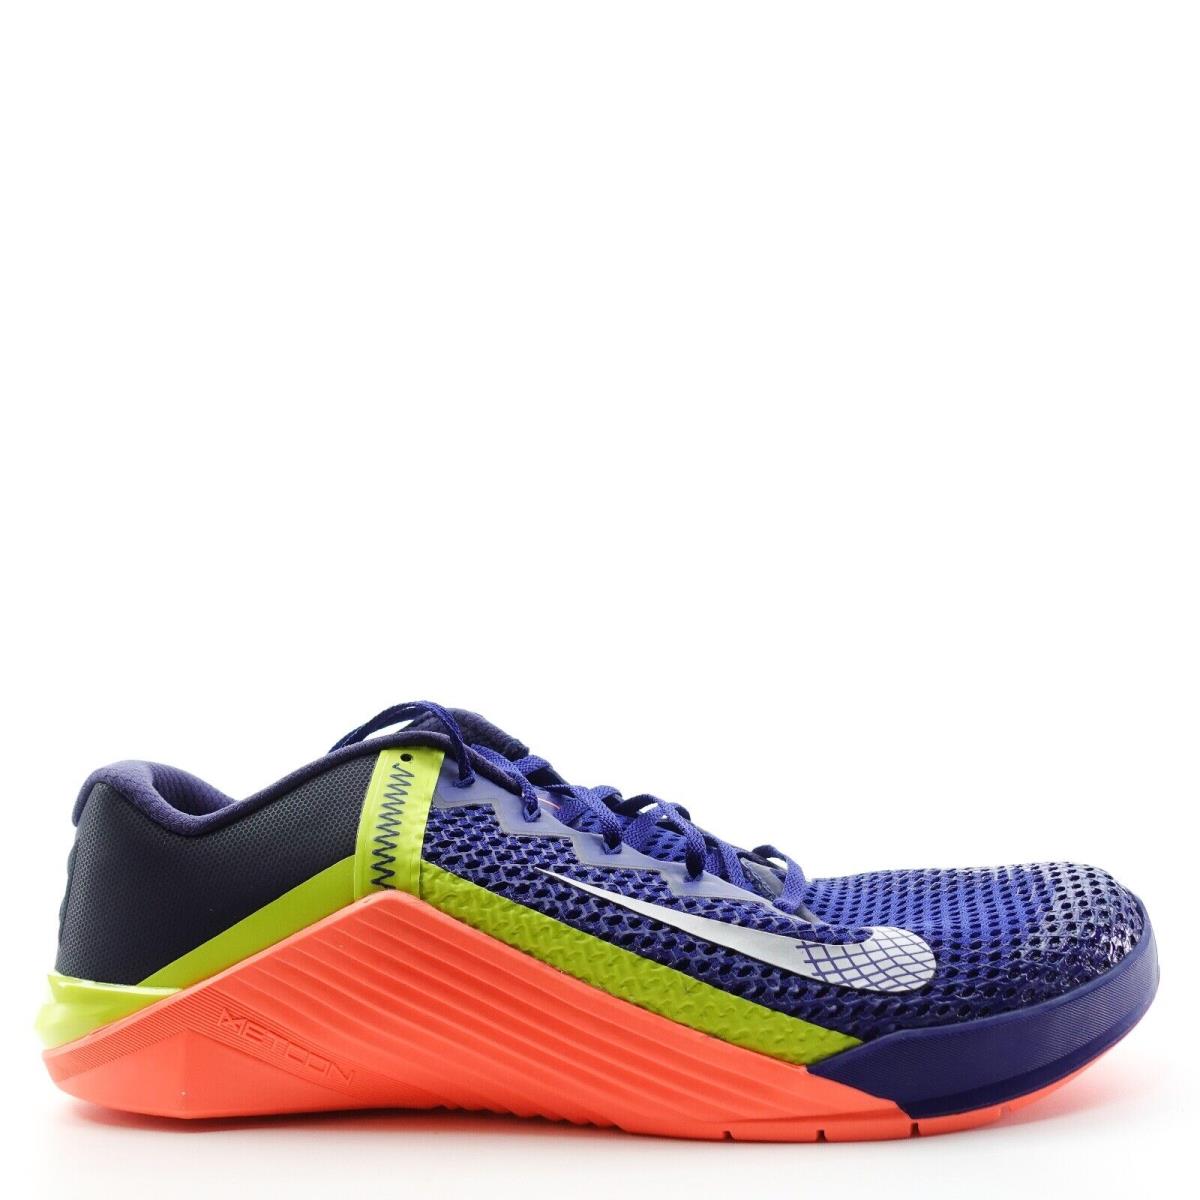 Nike Metcon 6 Royal Blue Mango Gym Training Shoes Men s Size 15 CK9388-400